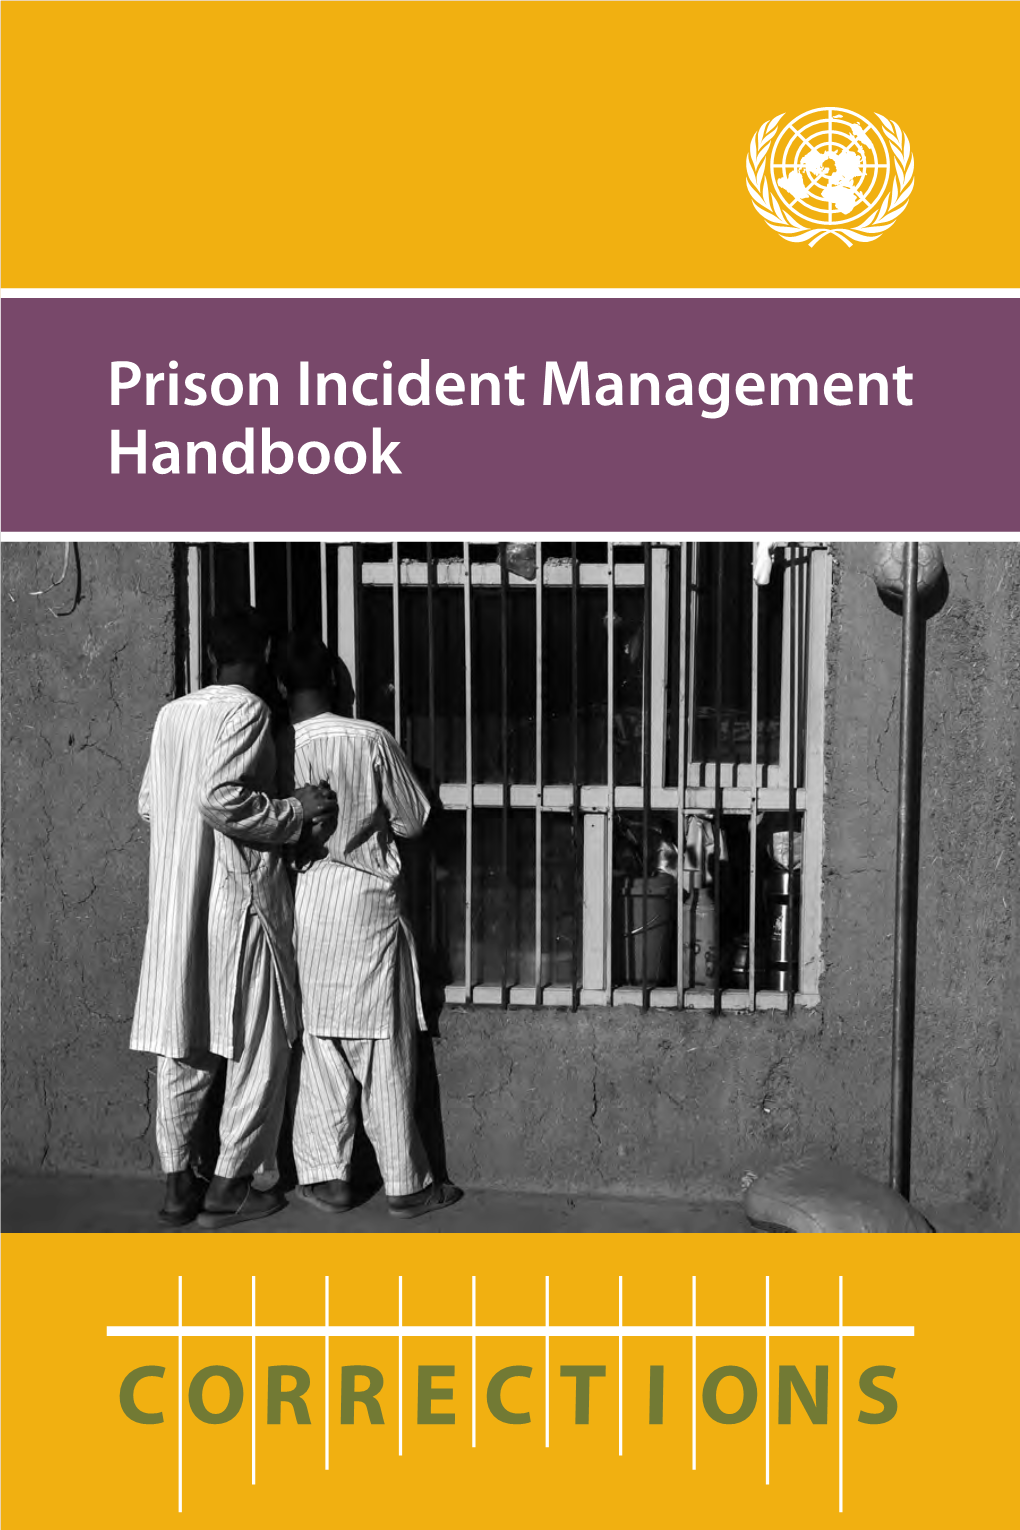 Prison Incident Management Handbook